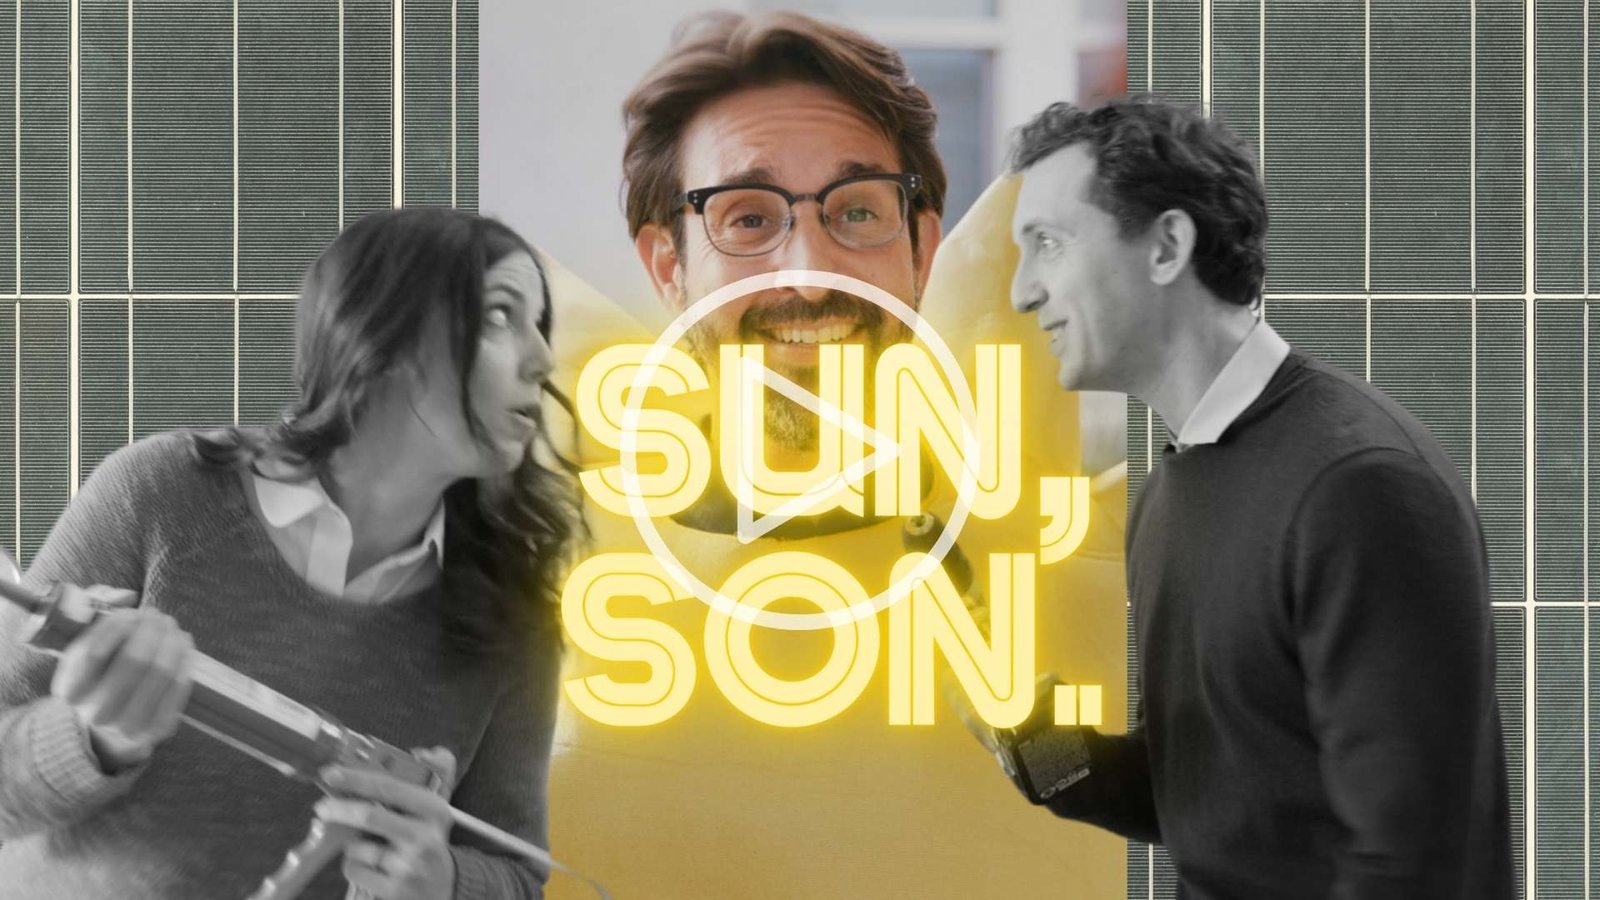 Sun son solar video thumbnail